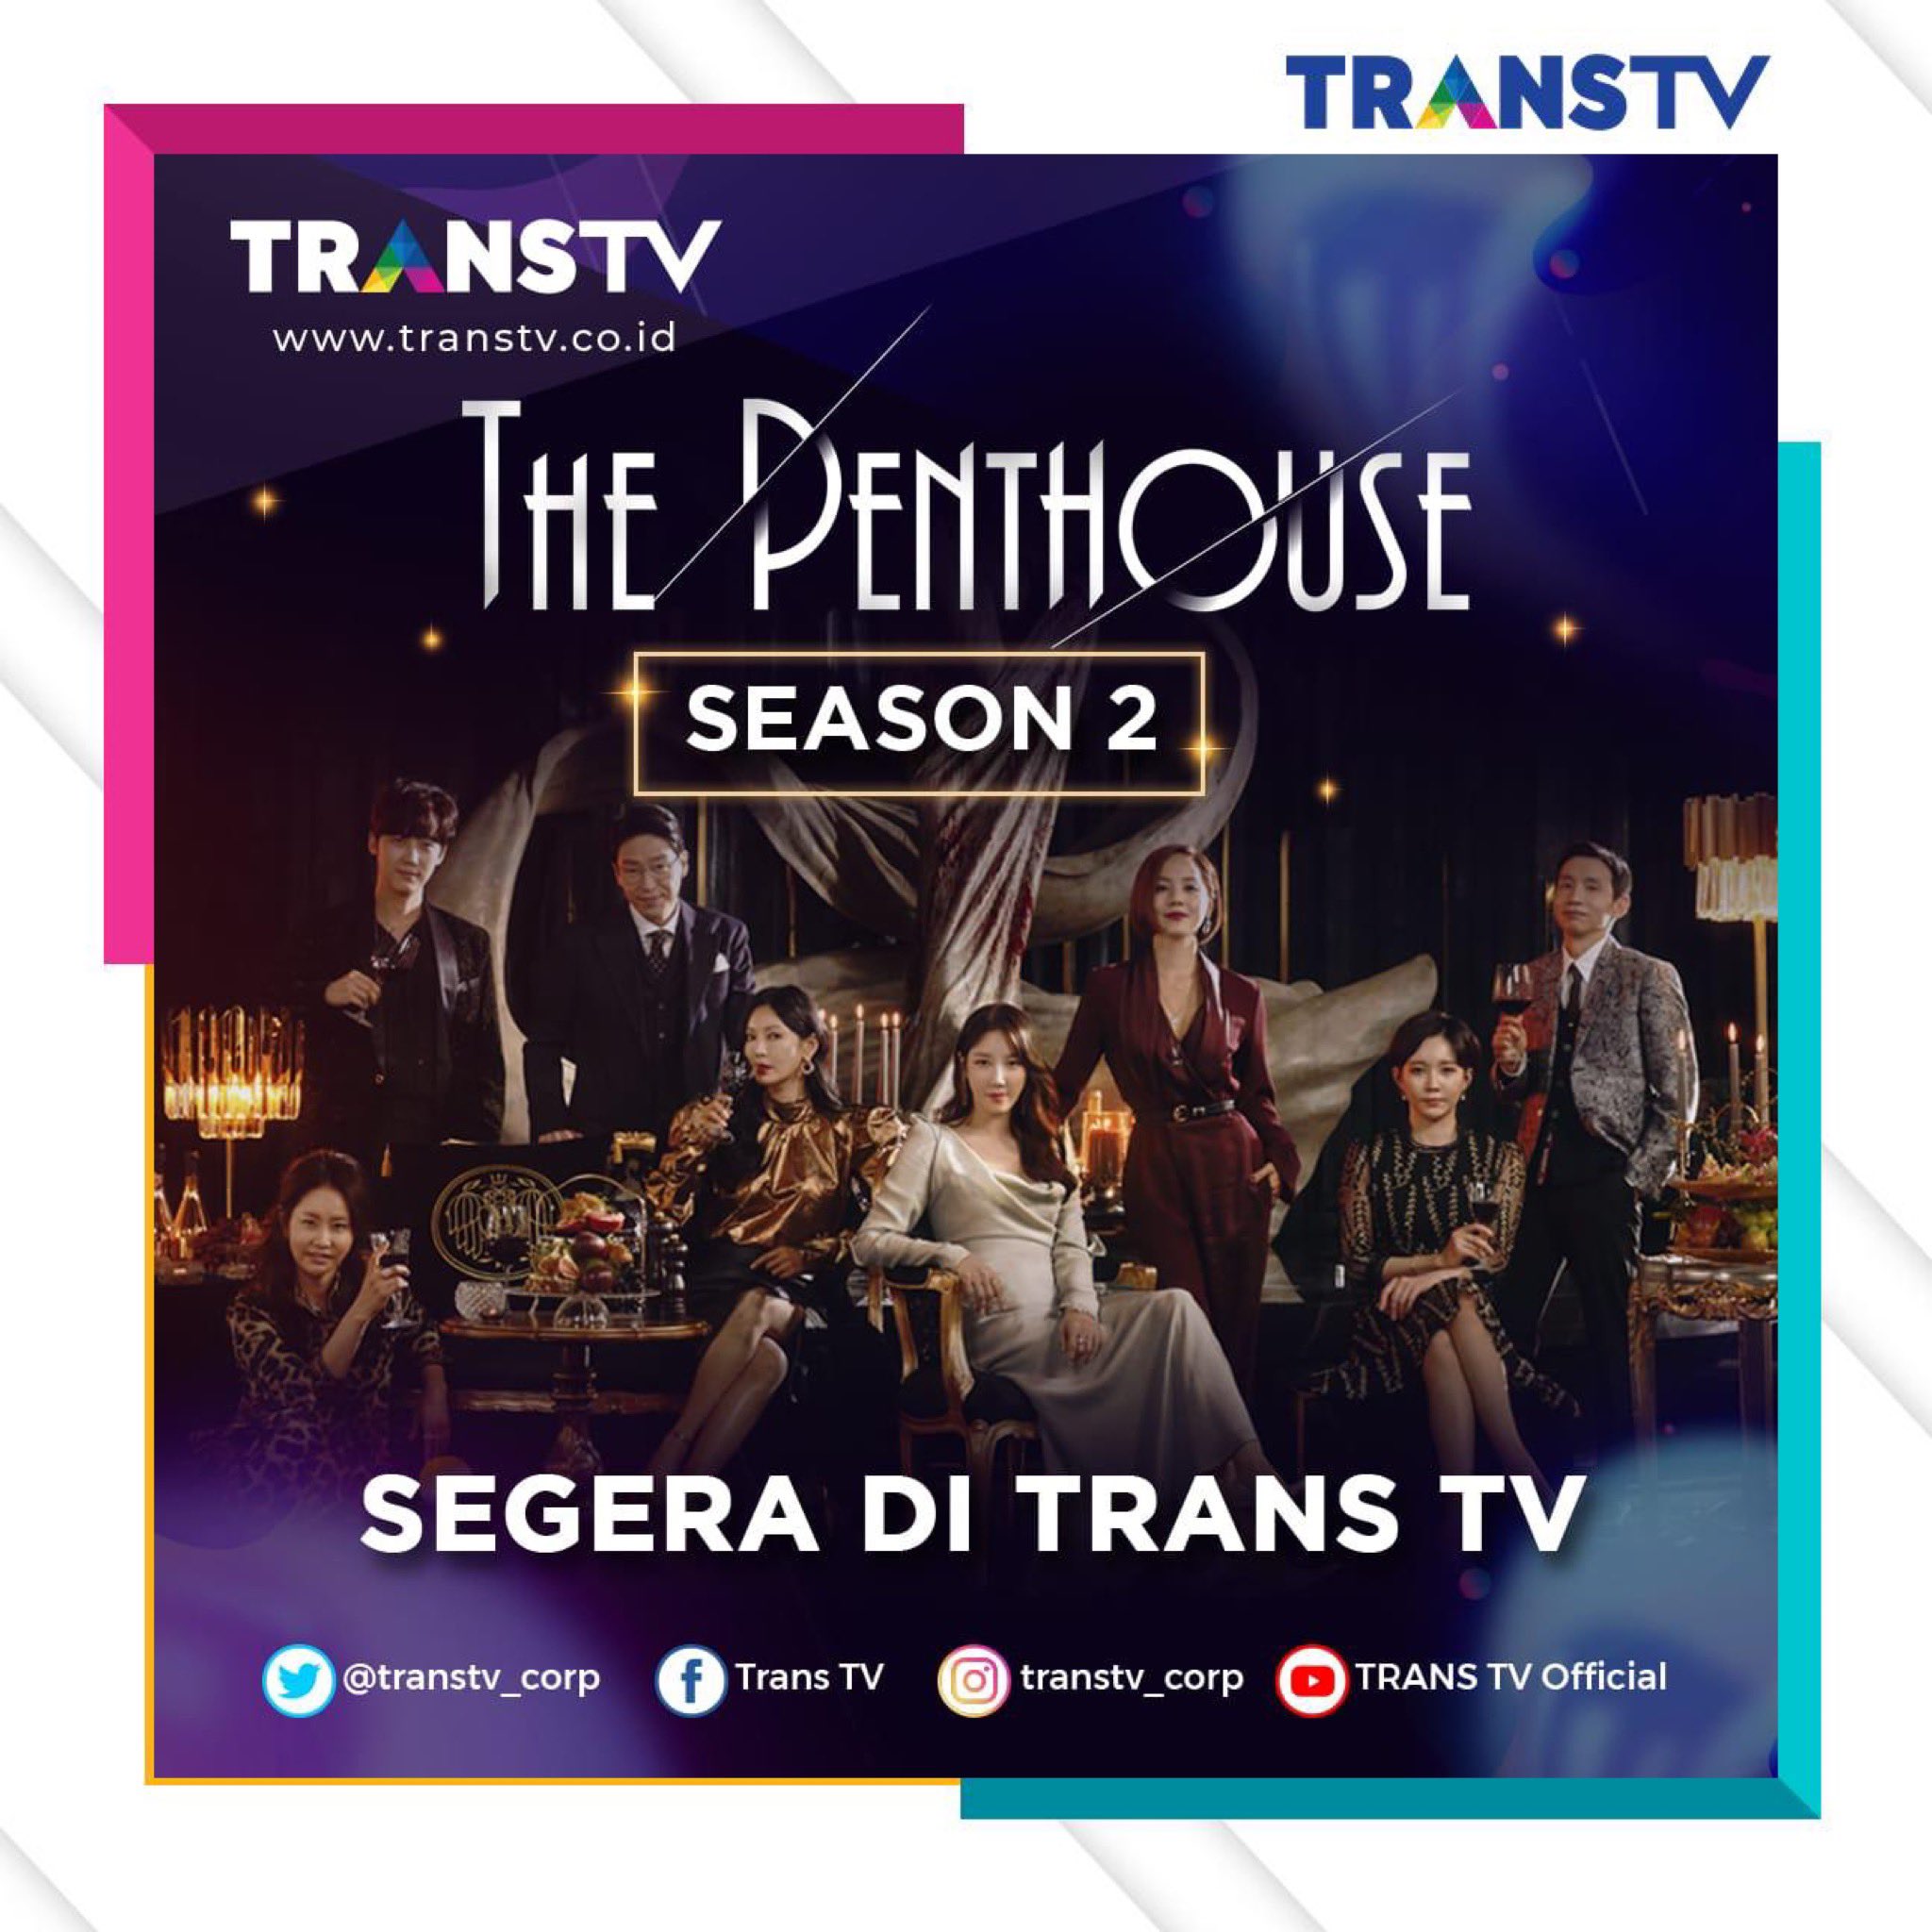 The penthouses drama season 3 tayang jam berapa